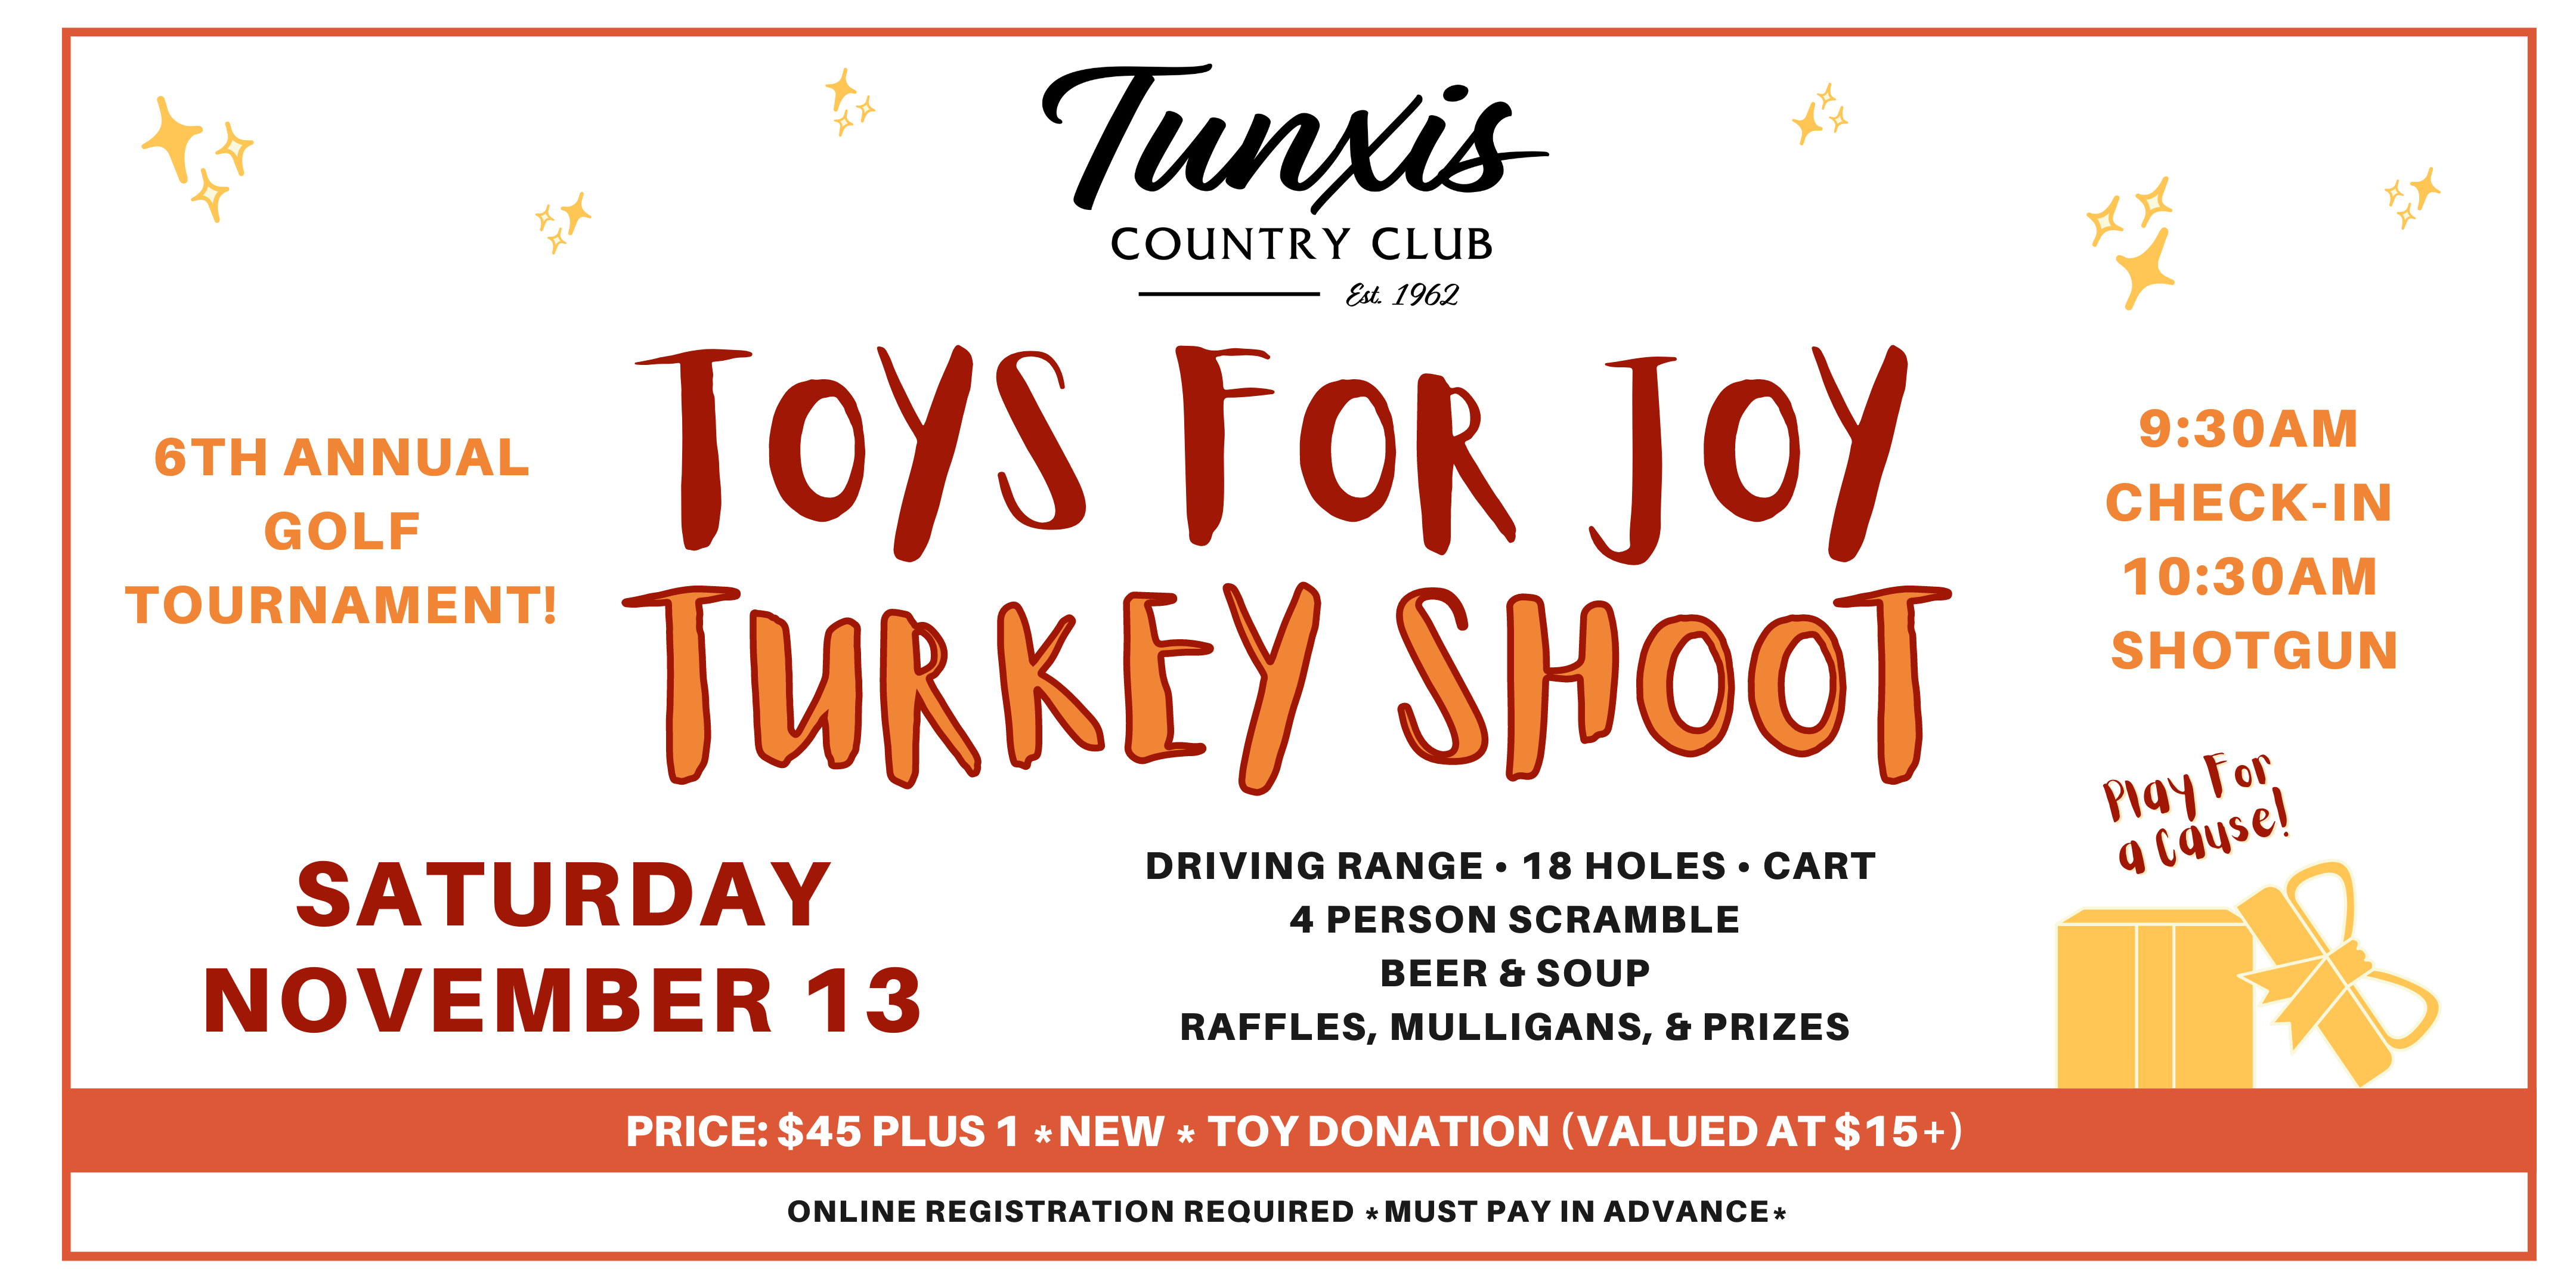 2021 TOYS FOR JOY Turkey Shoot Golf Tournament at Tunxis Country Club